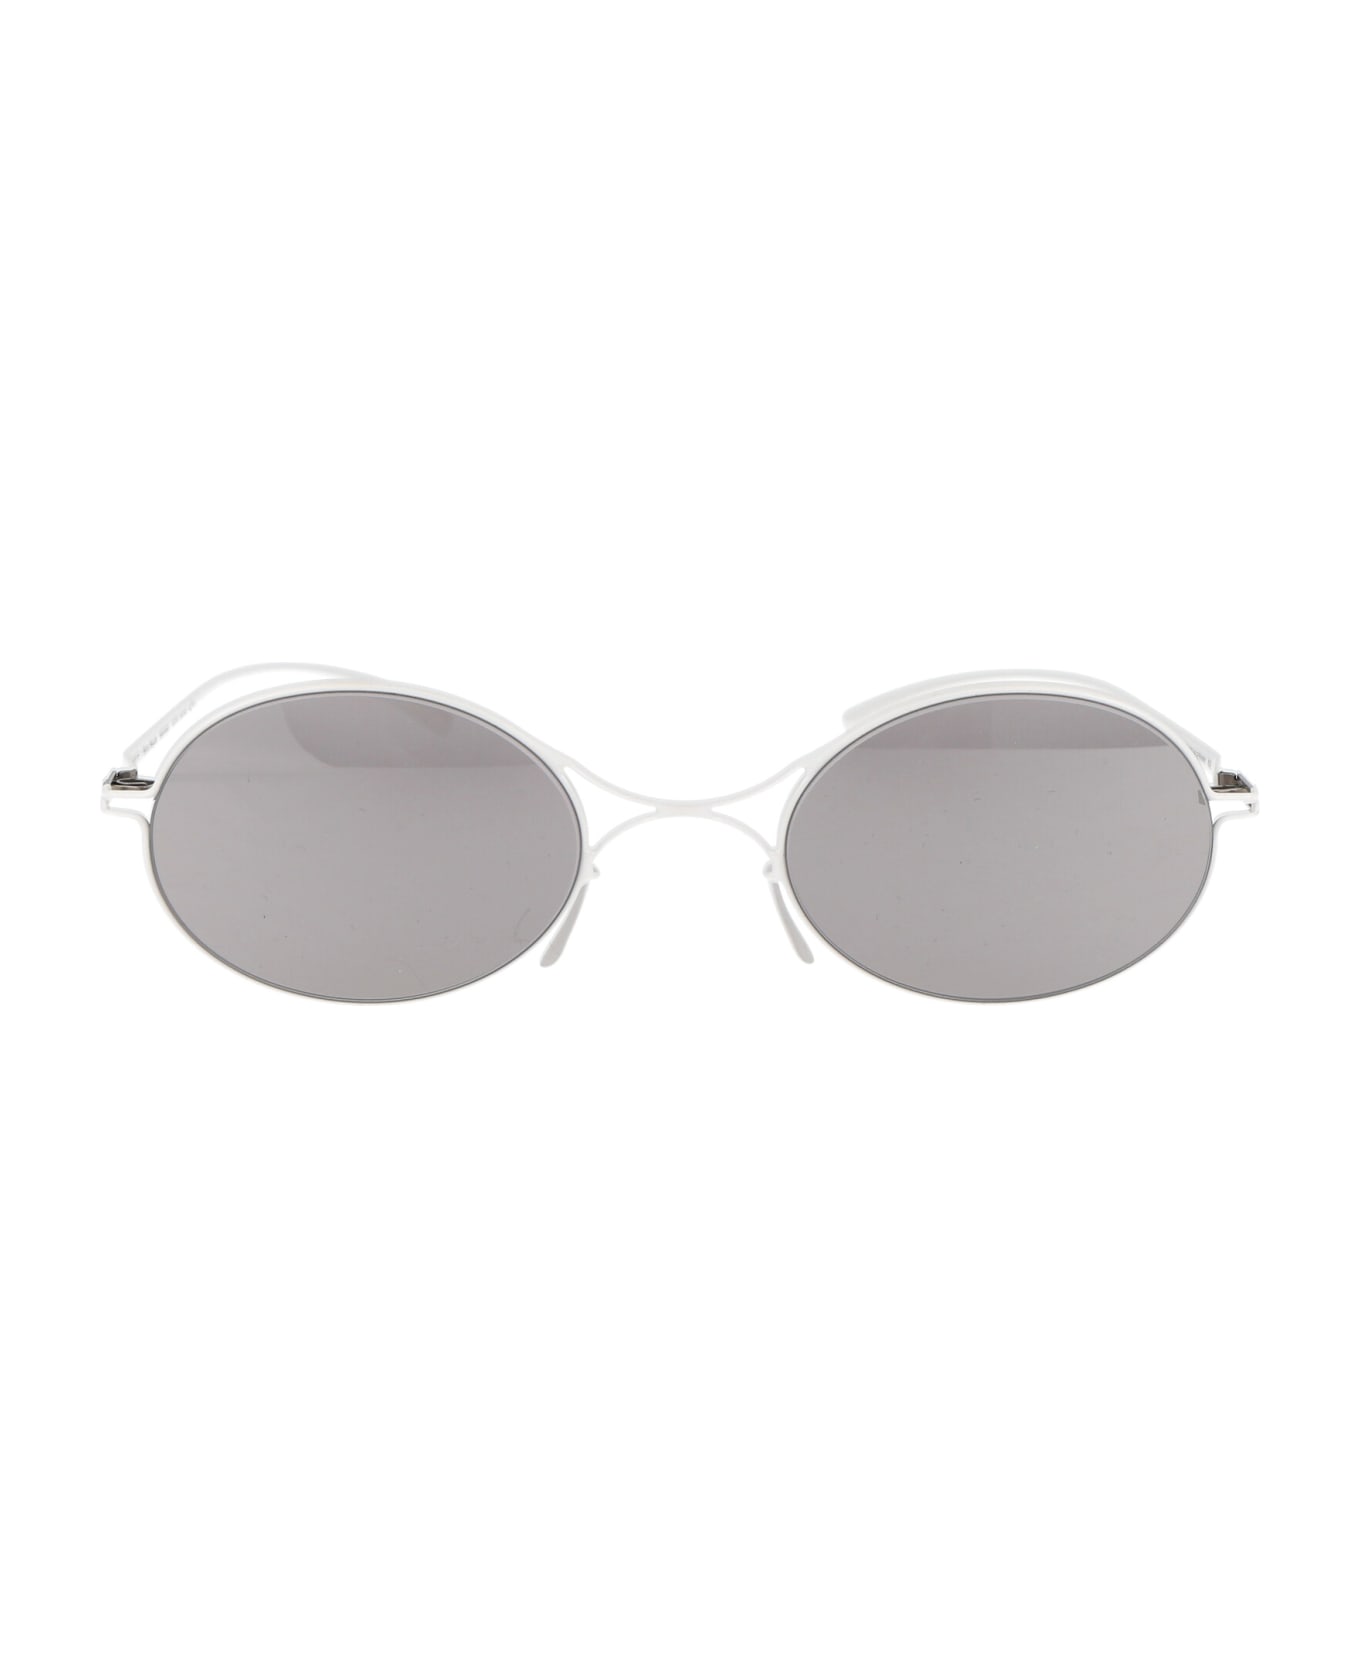 Mykita Mmesse001 Sunglasses - 333 E13 White Warm Grey Flash サングラス